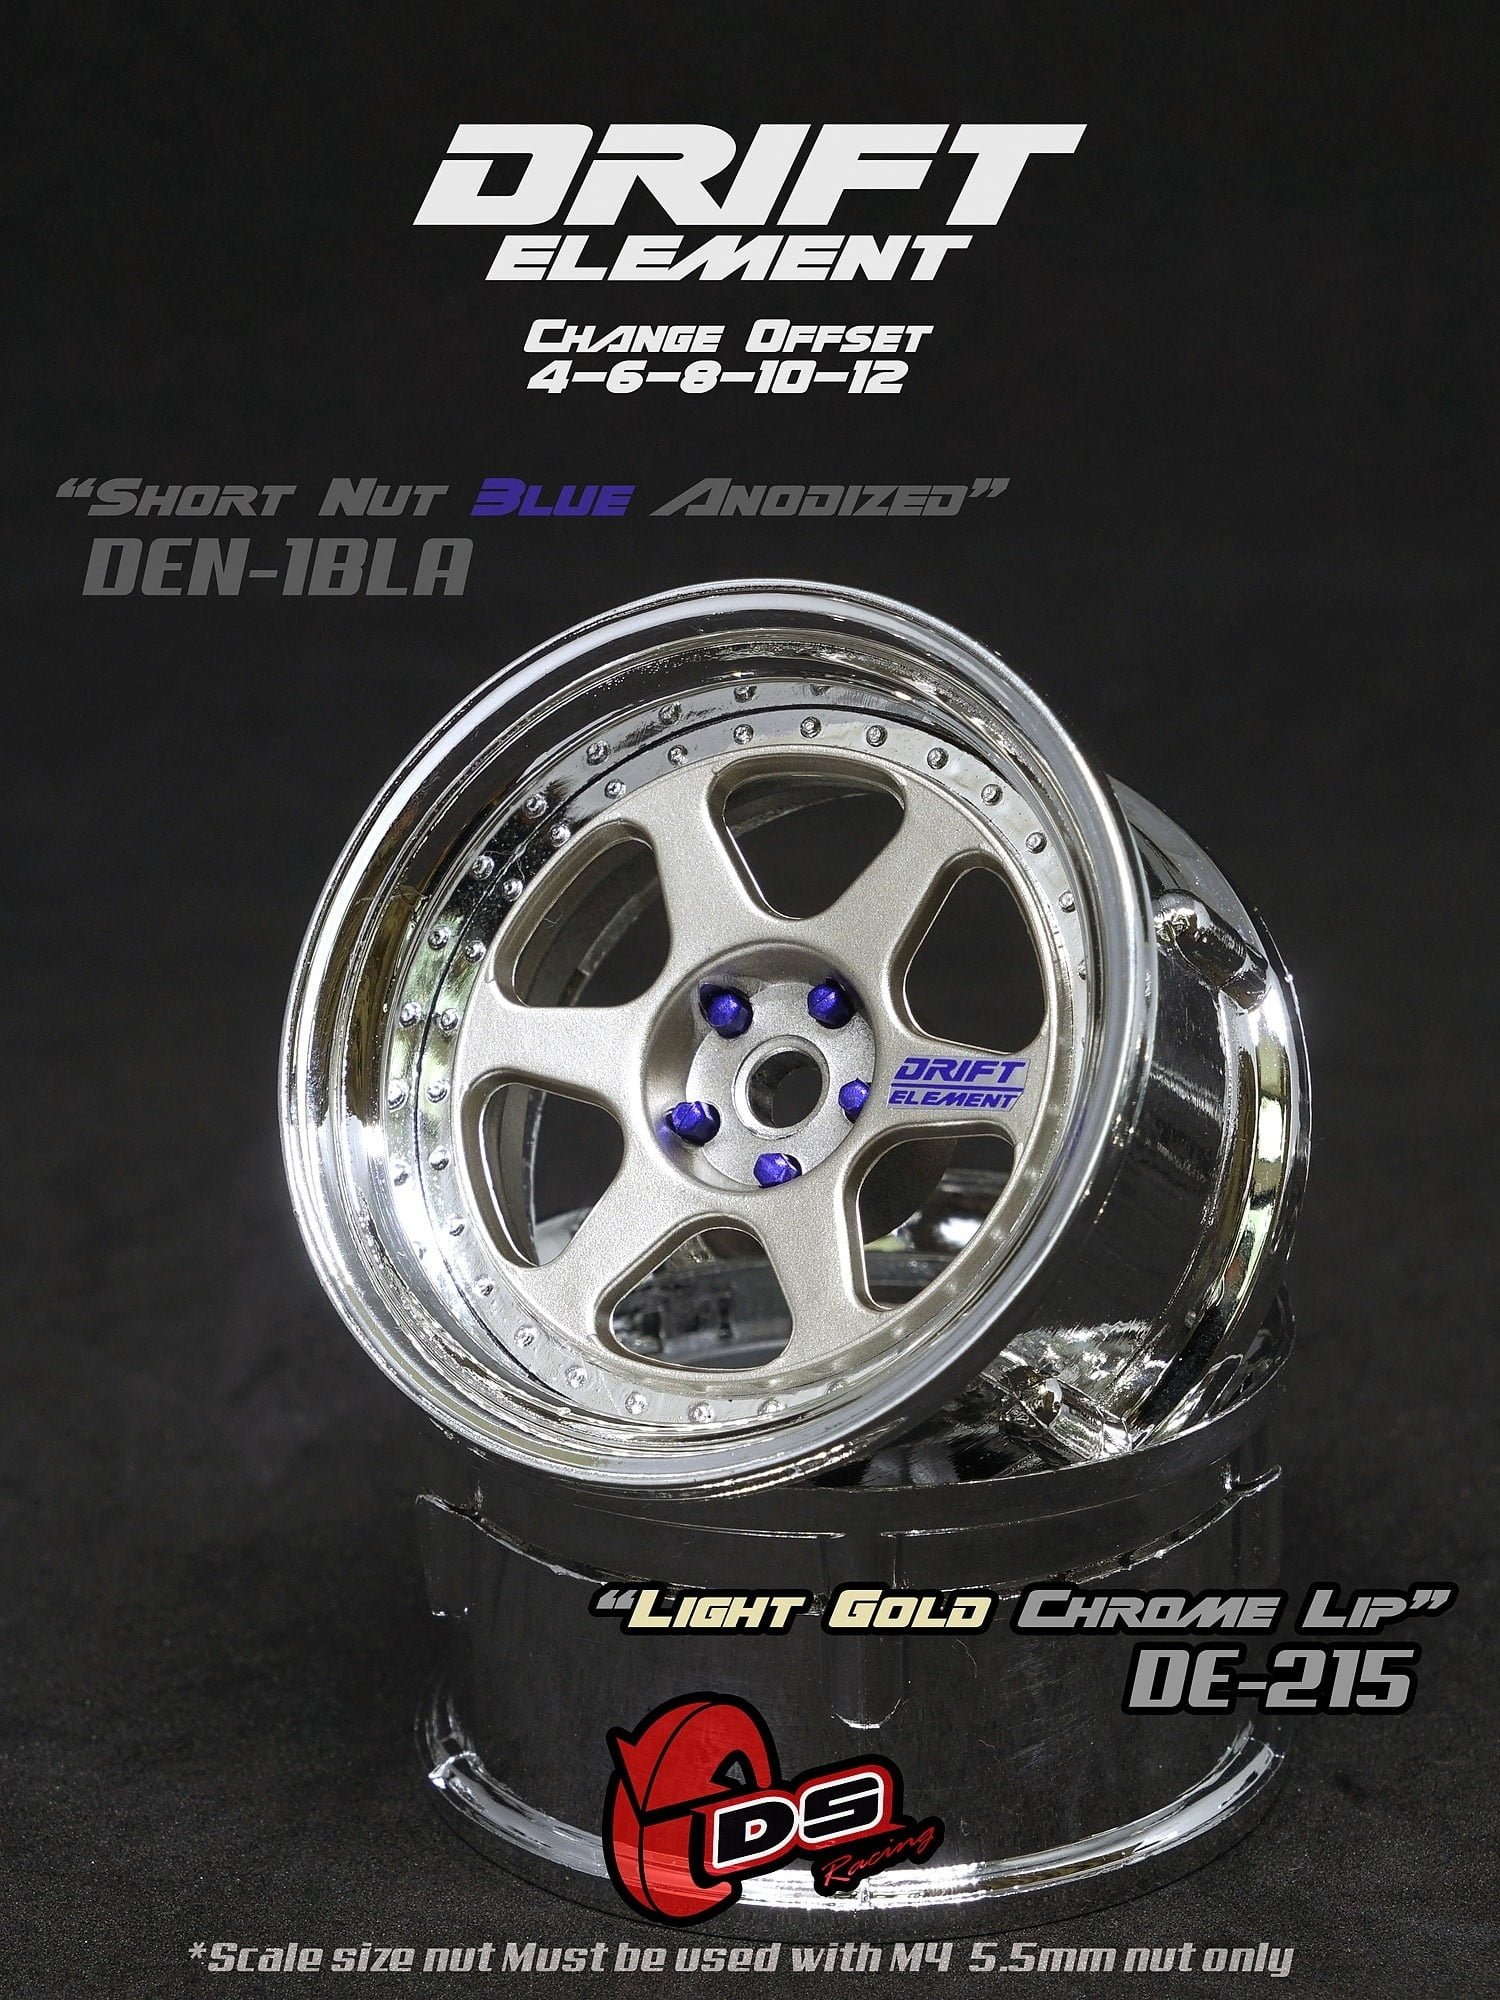 DS Racing Drift Element II 6 Spoke Rim 2 pcs Light Gold Chrome Lip – DE-215